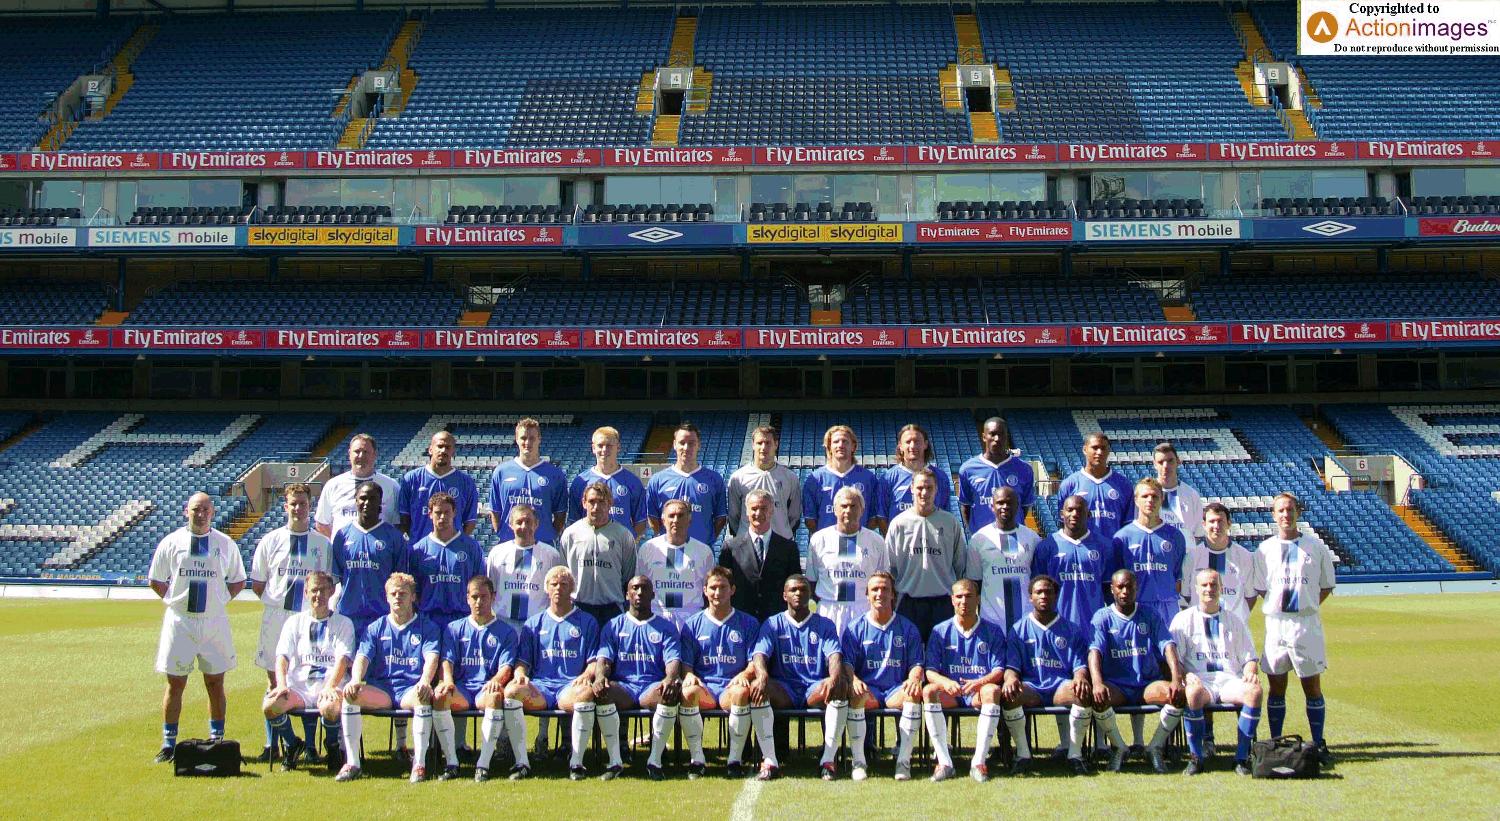 Chelsea Team Picture